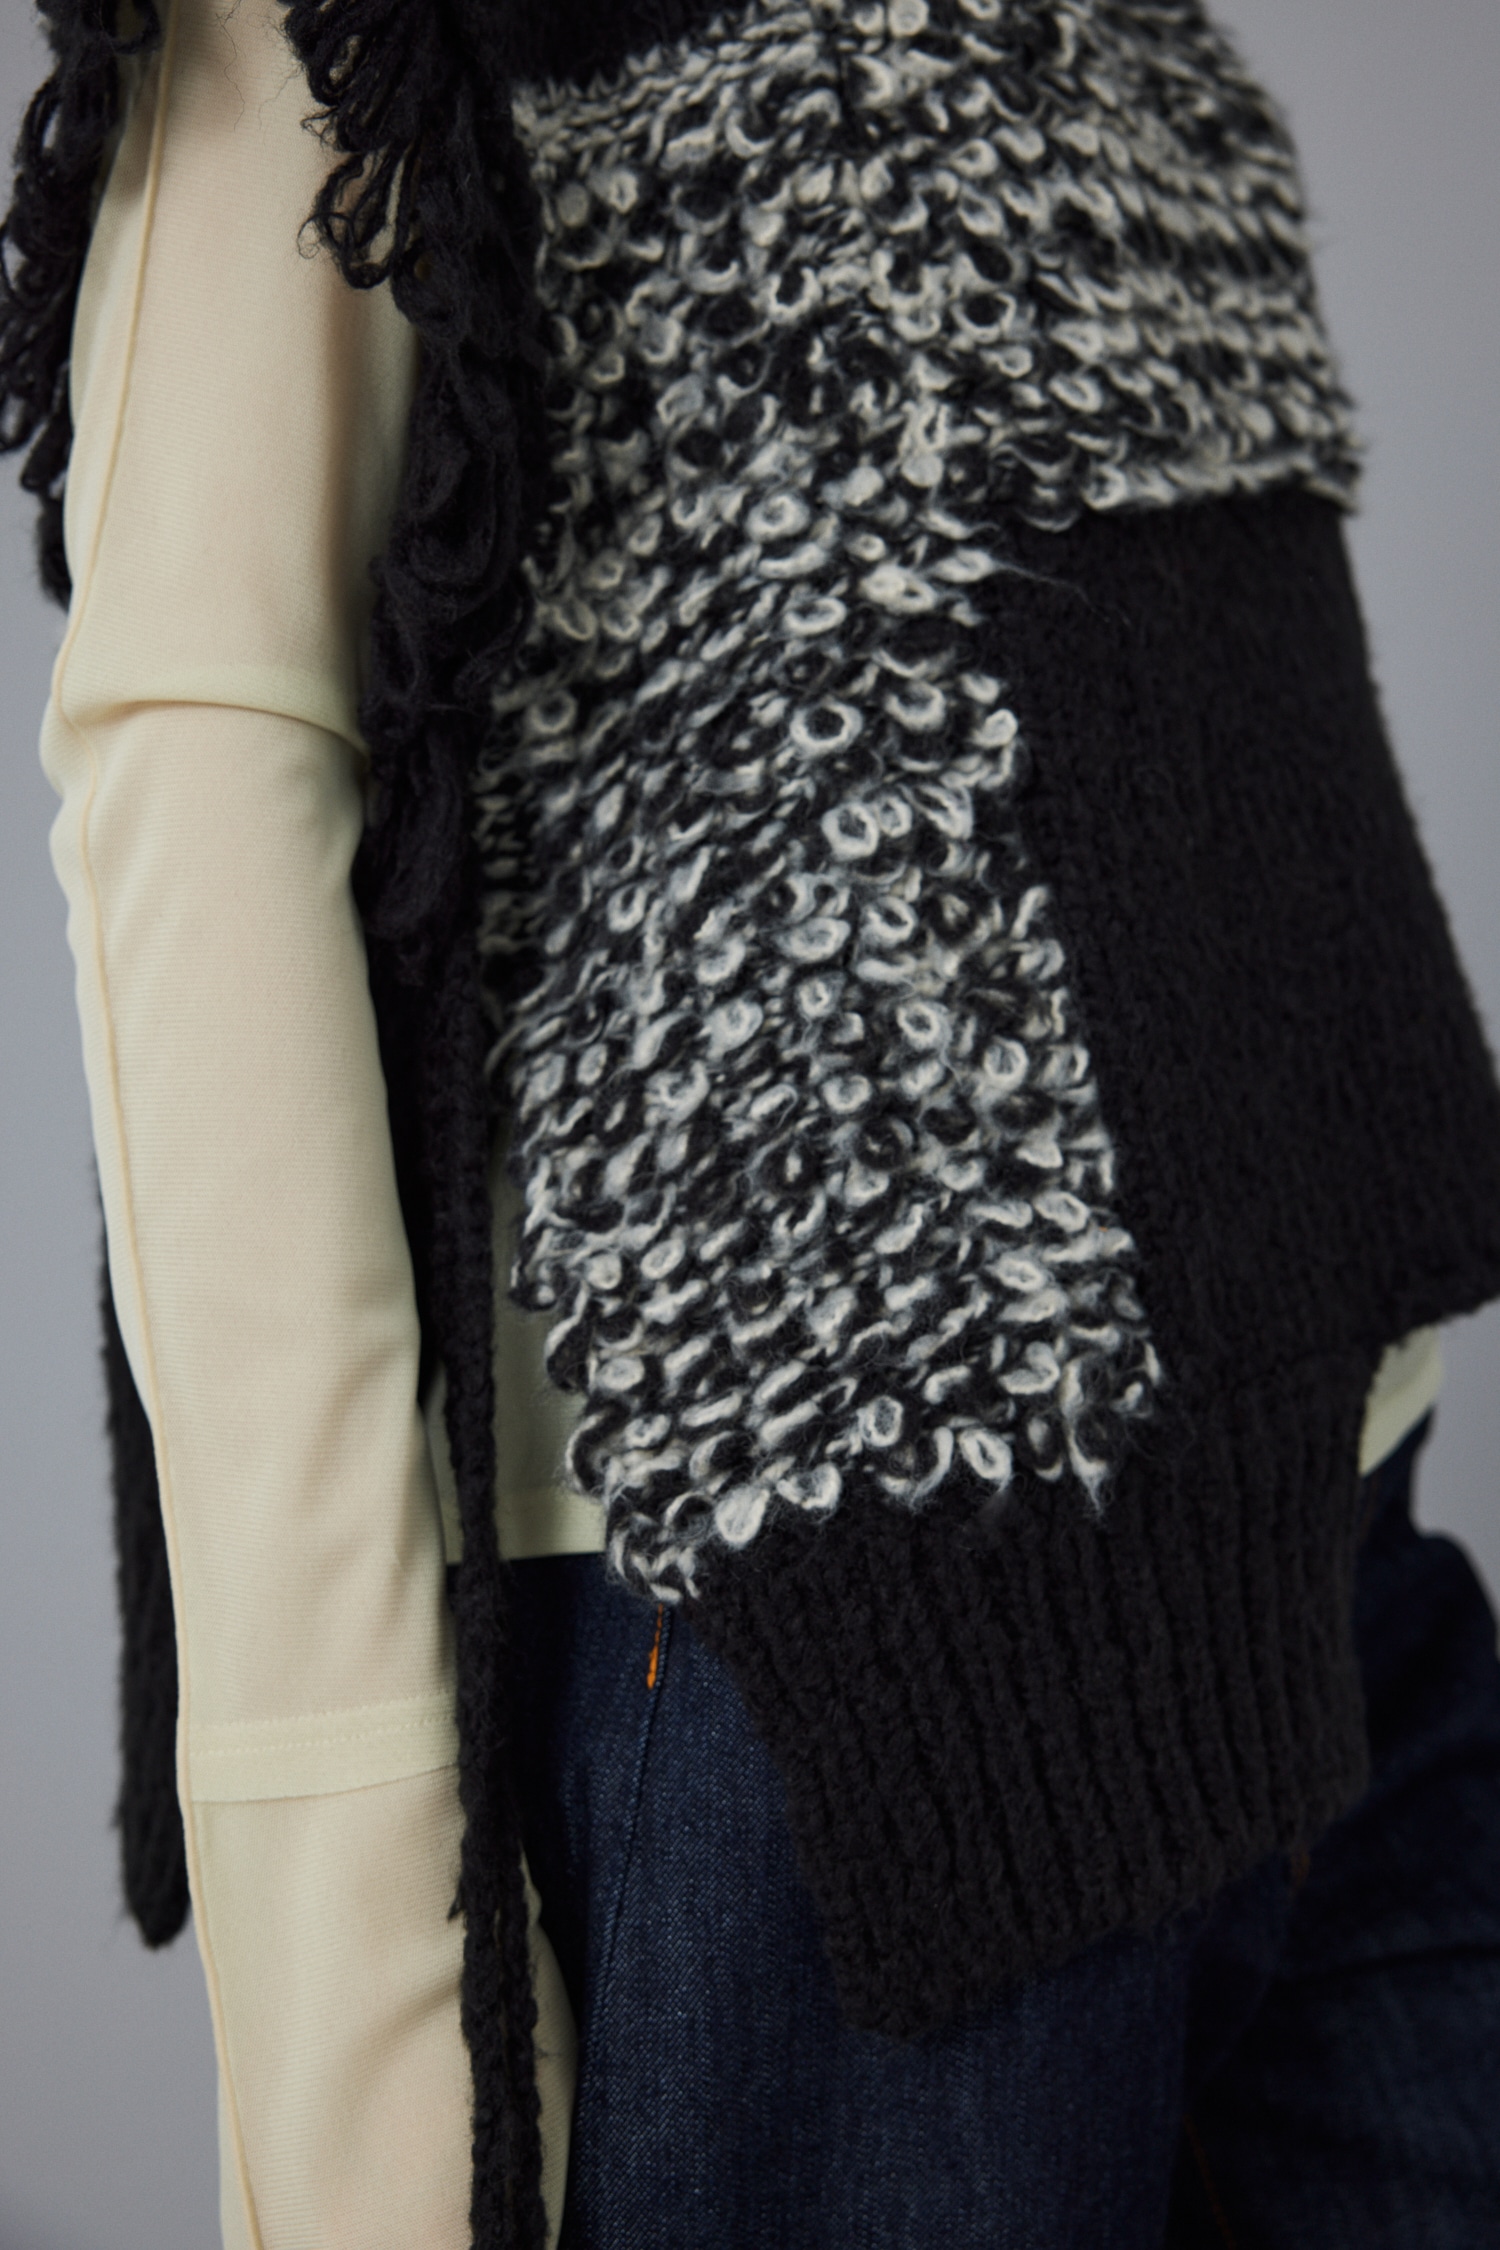 Scale knit vest